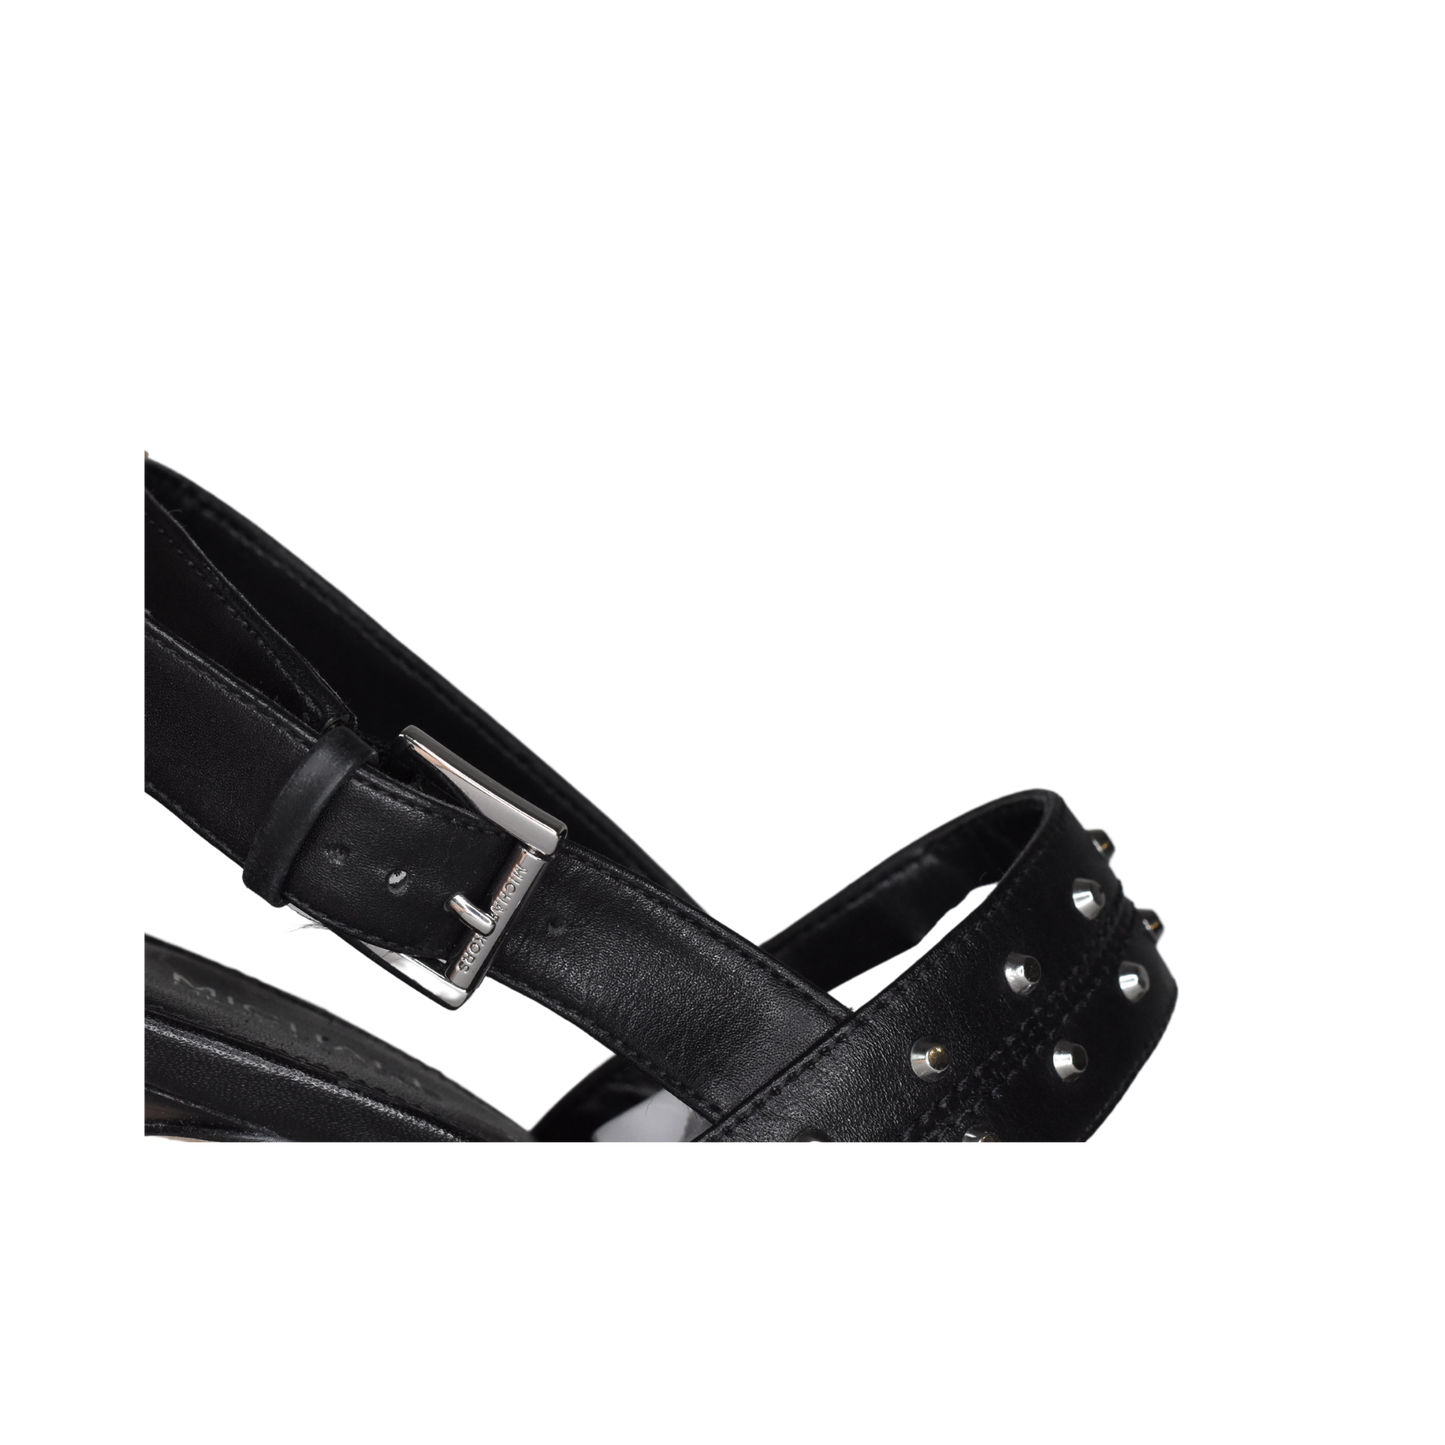 Michael Kors Studded High Heels Black, Silver Size 7.5 SKU 000192-1